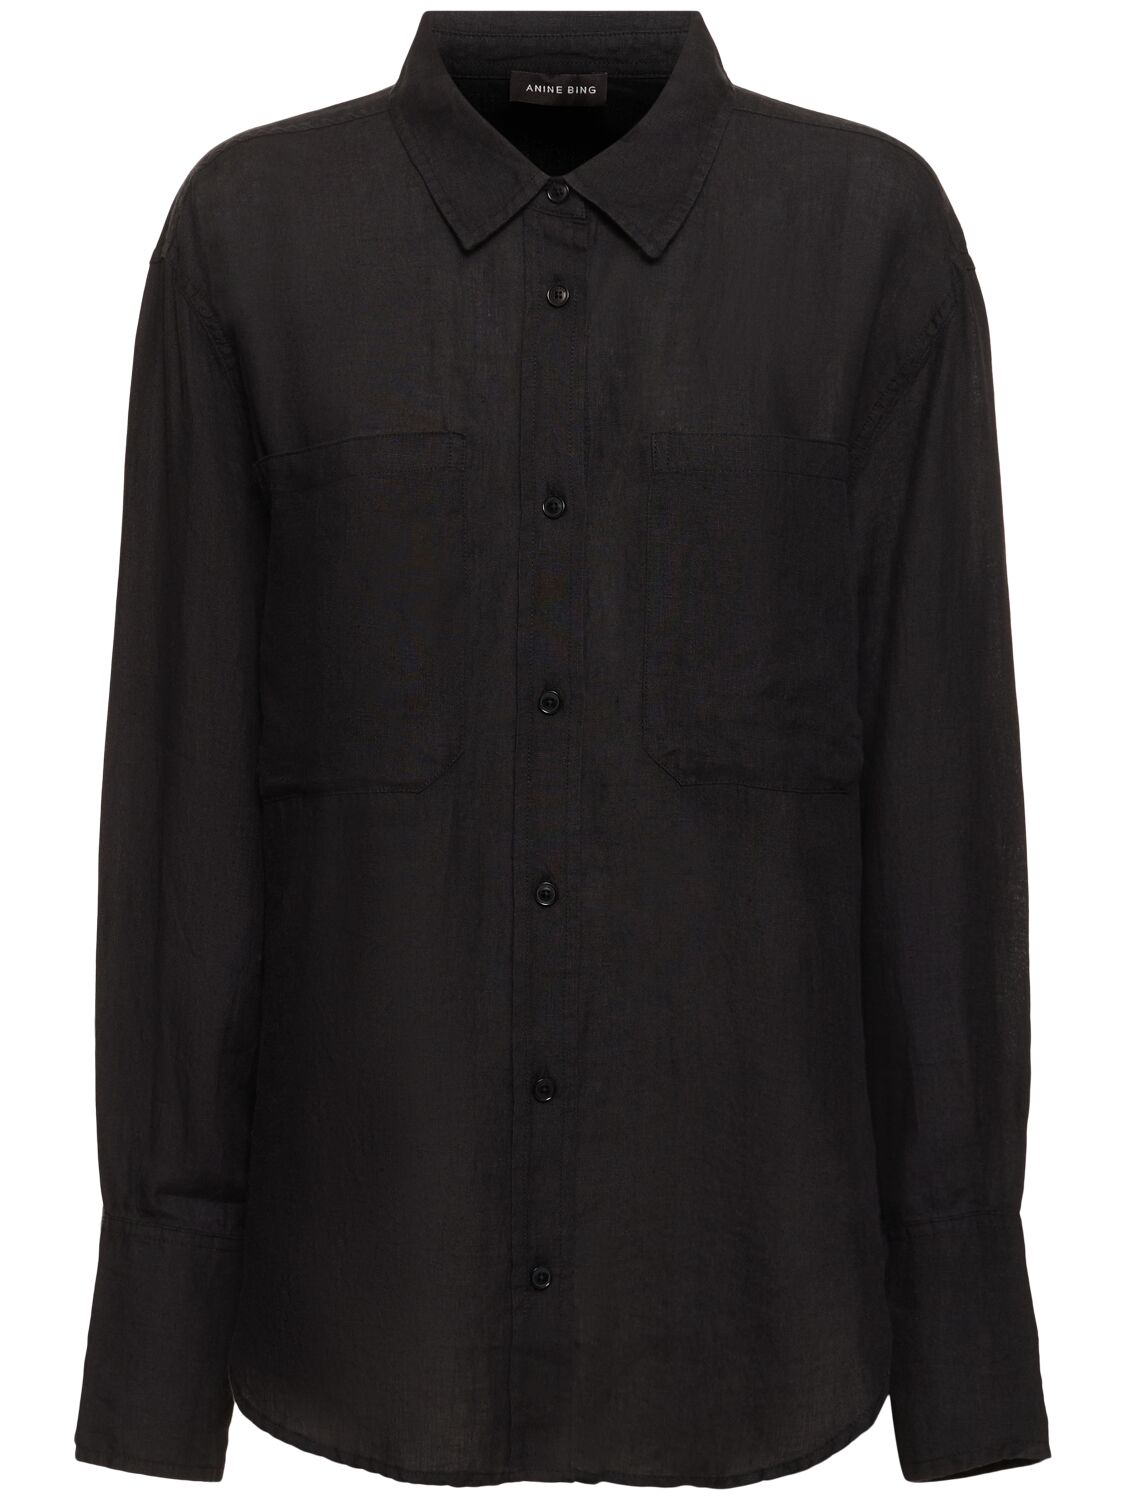 Anine Bing Dante Linen Blend Shirt In Black